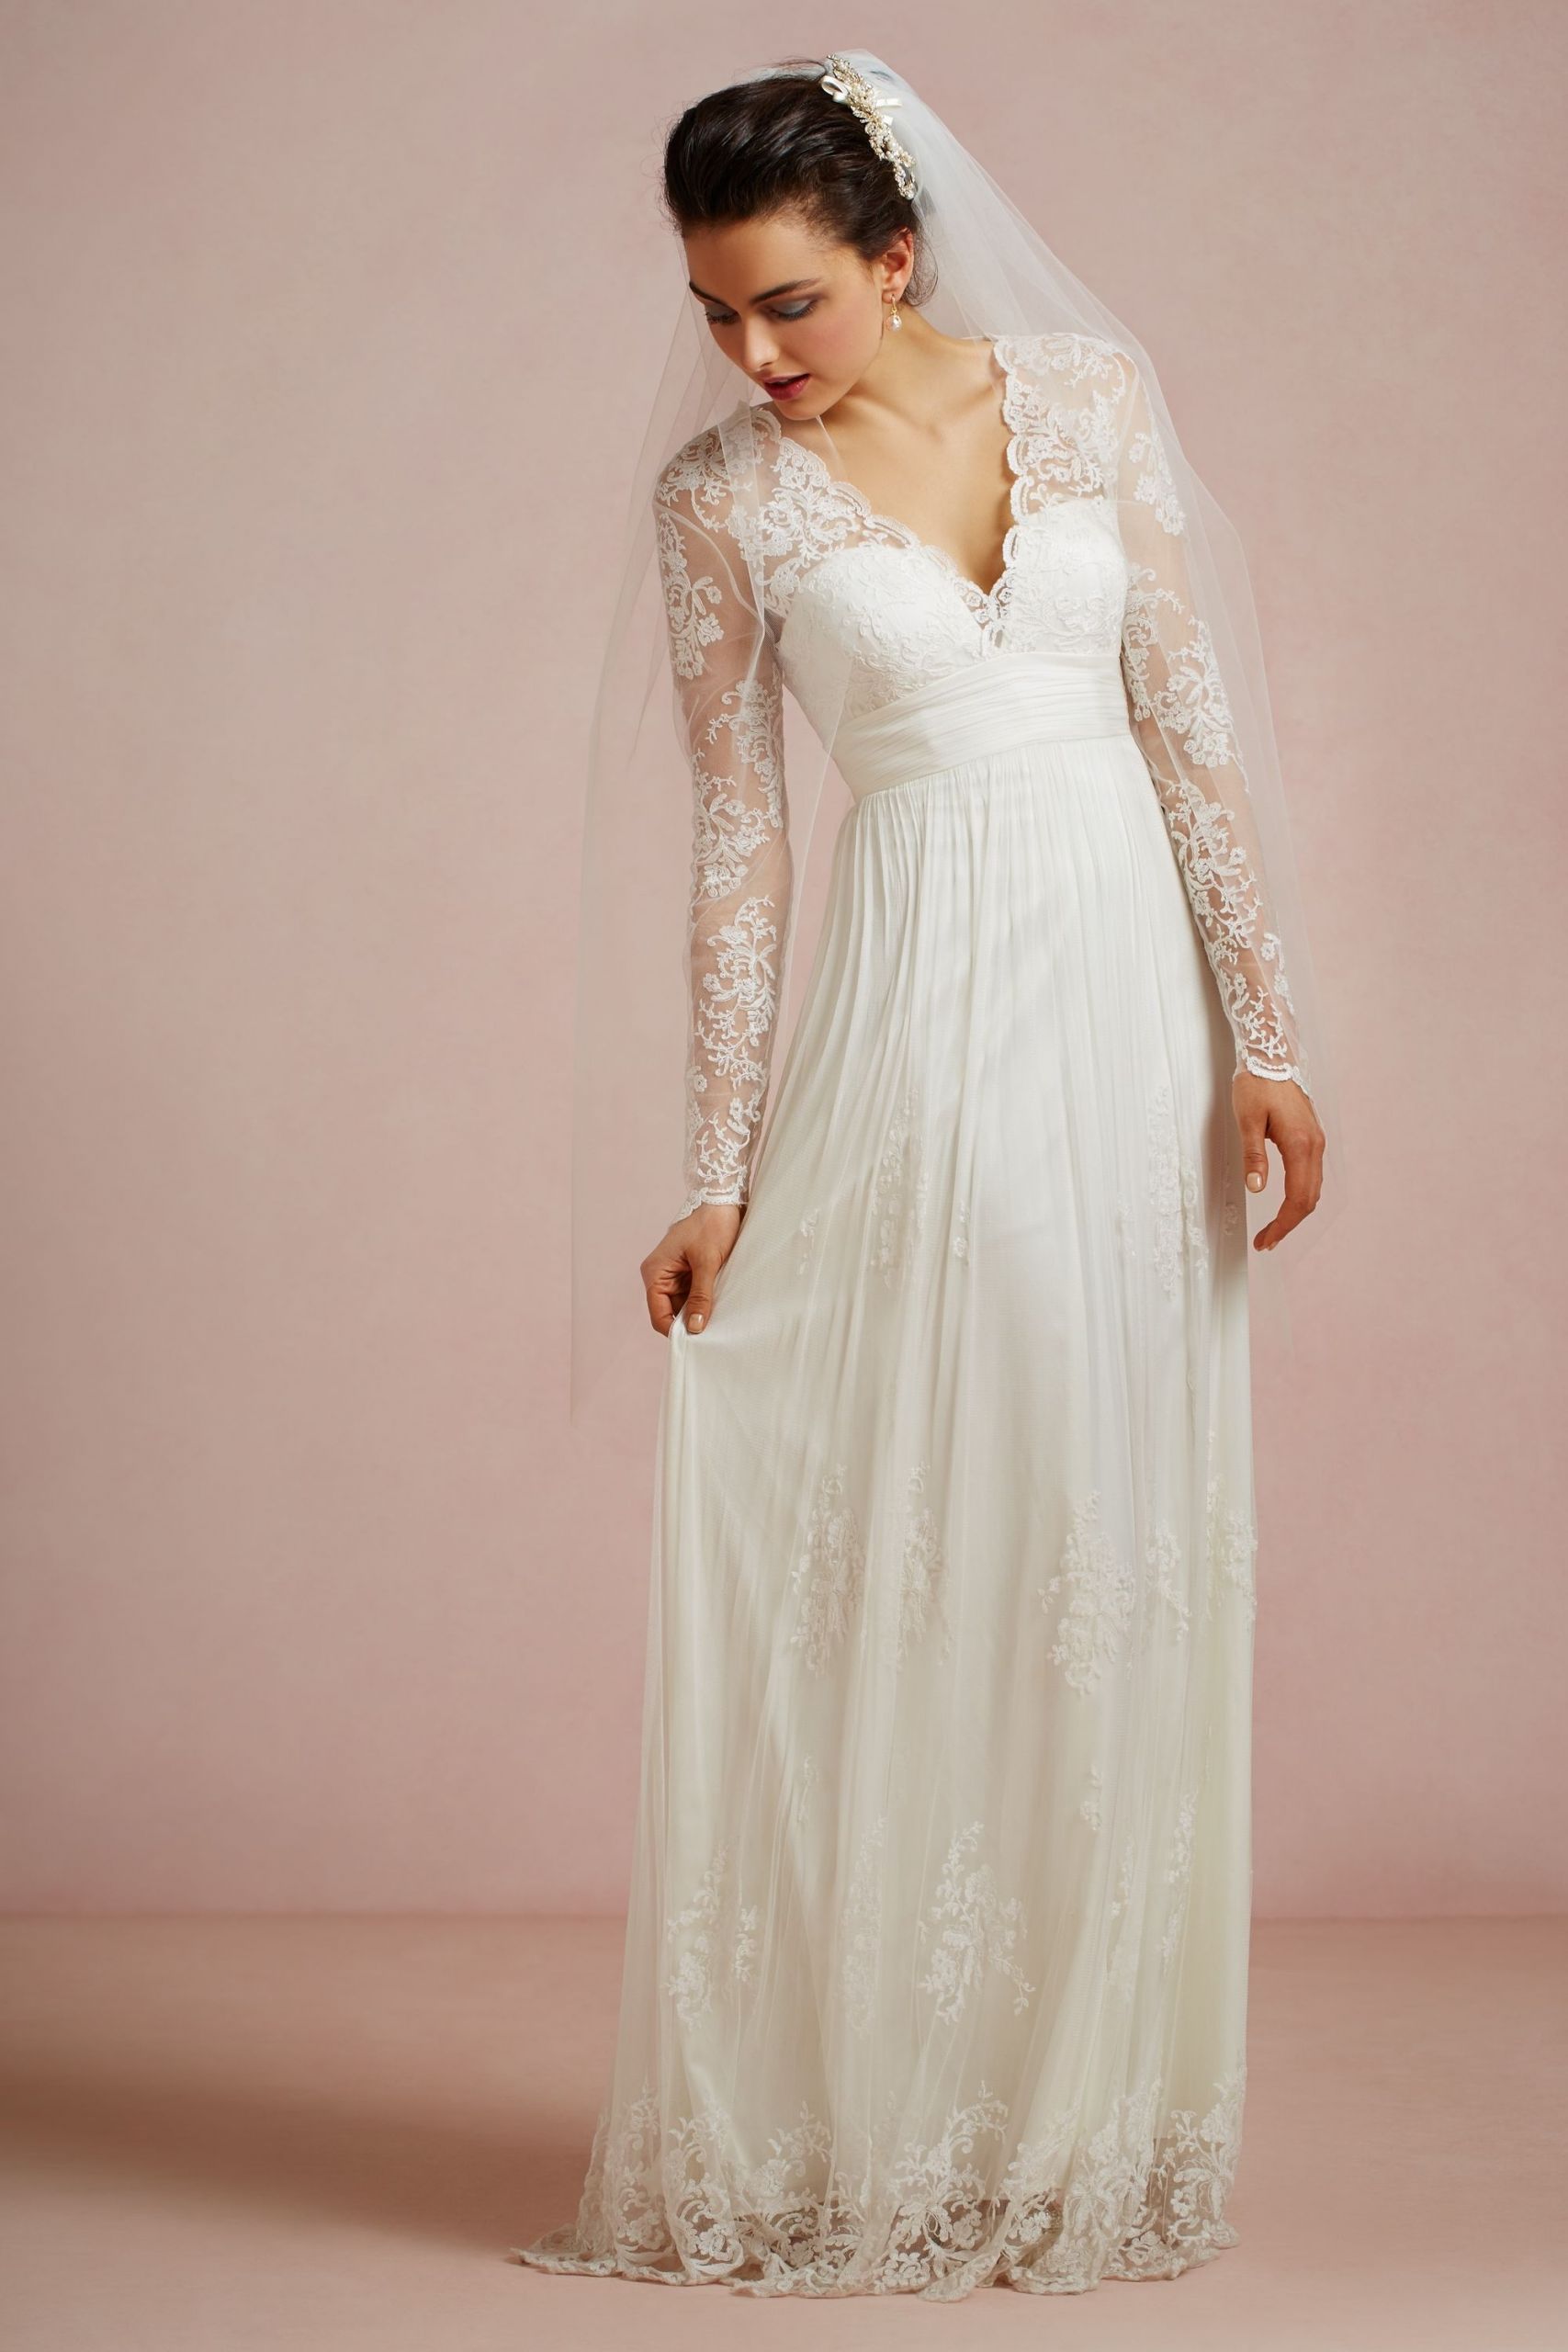 Empire Waist Wedding Dresses
 40 Gorgeous Lace Sleeve Wedding Dresses